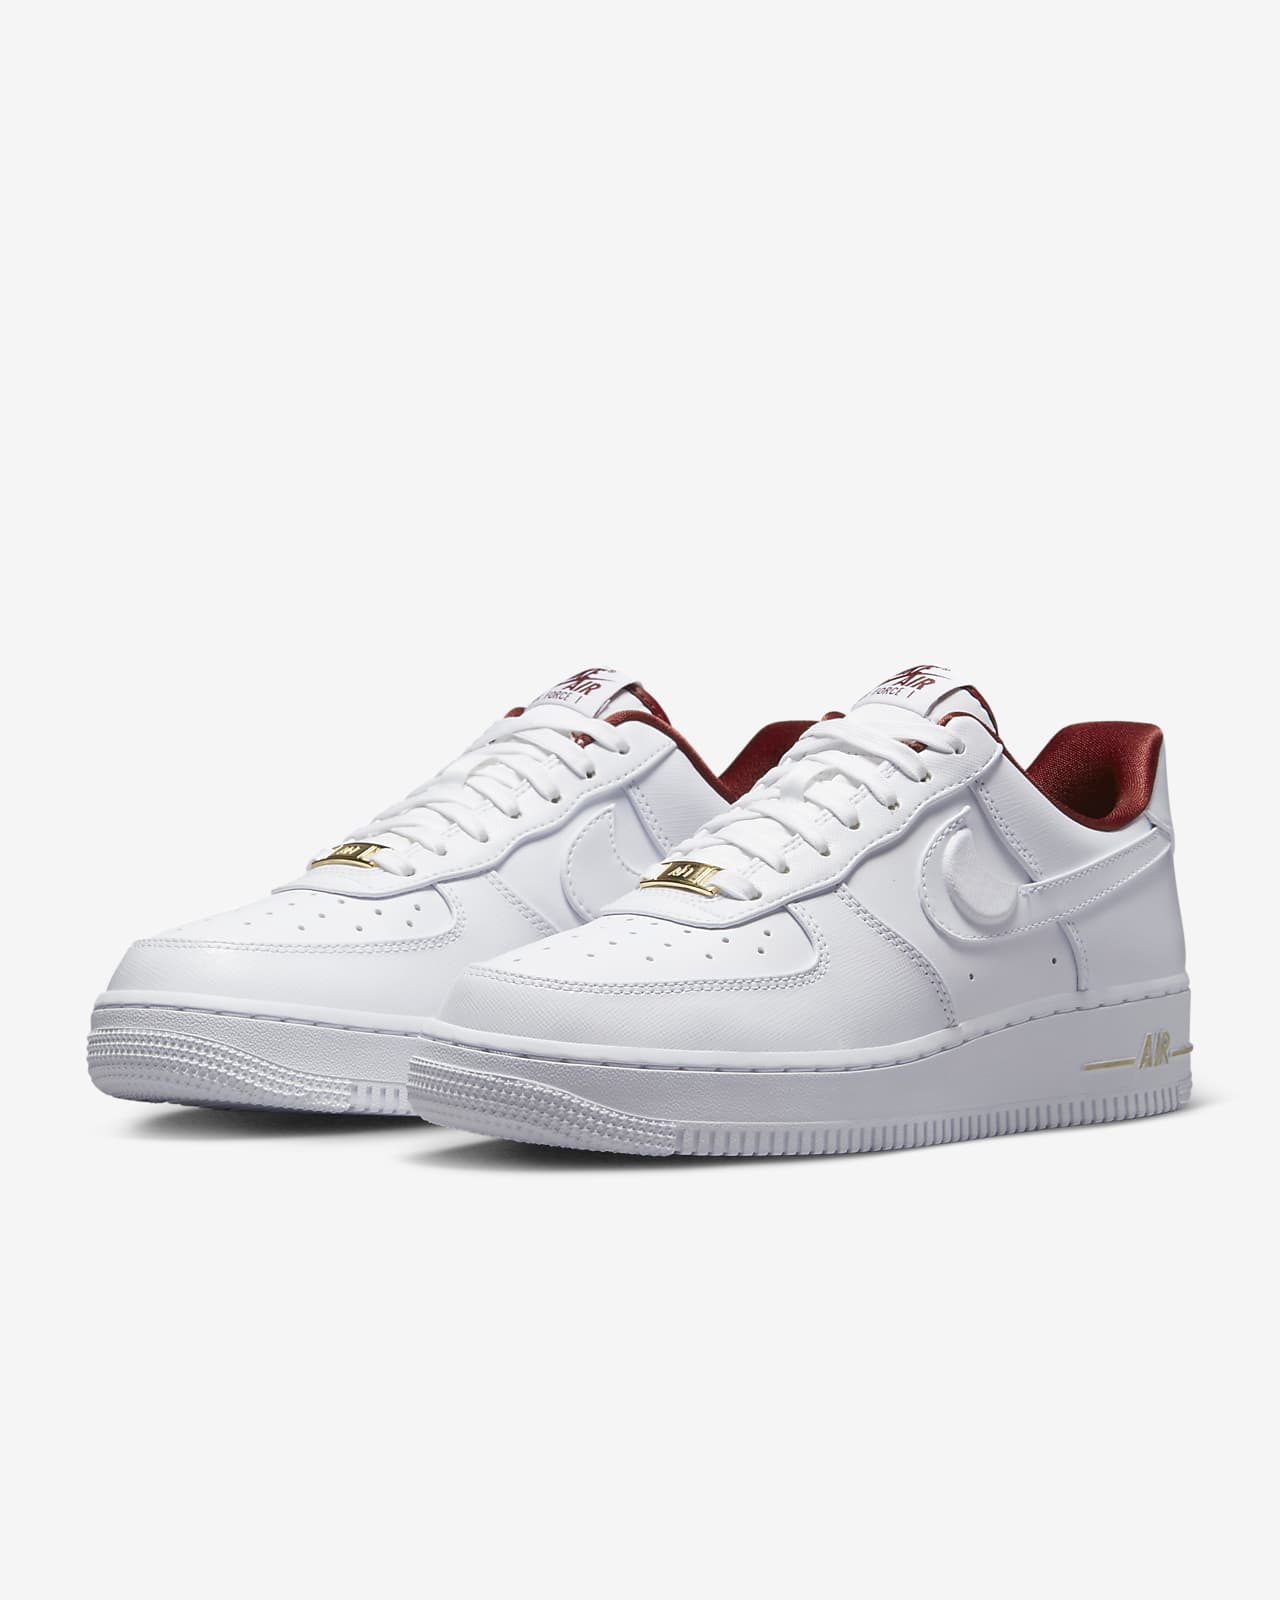  Nike Women's Air Force 1 Basketball Shoes,  White/White-metallic Gold, 6.5